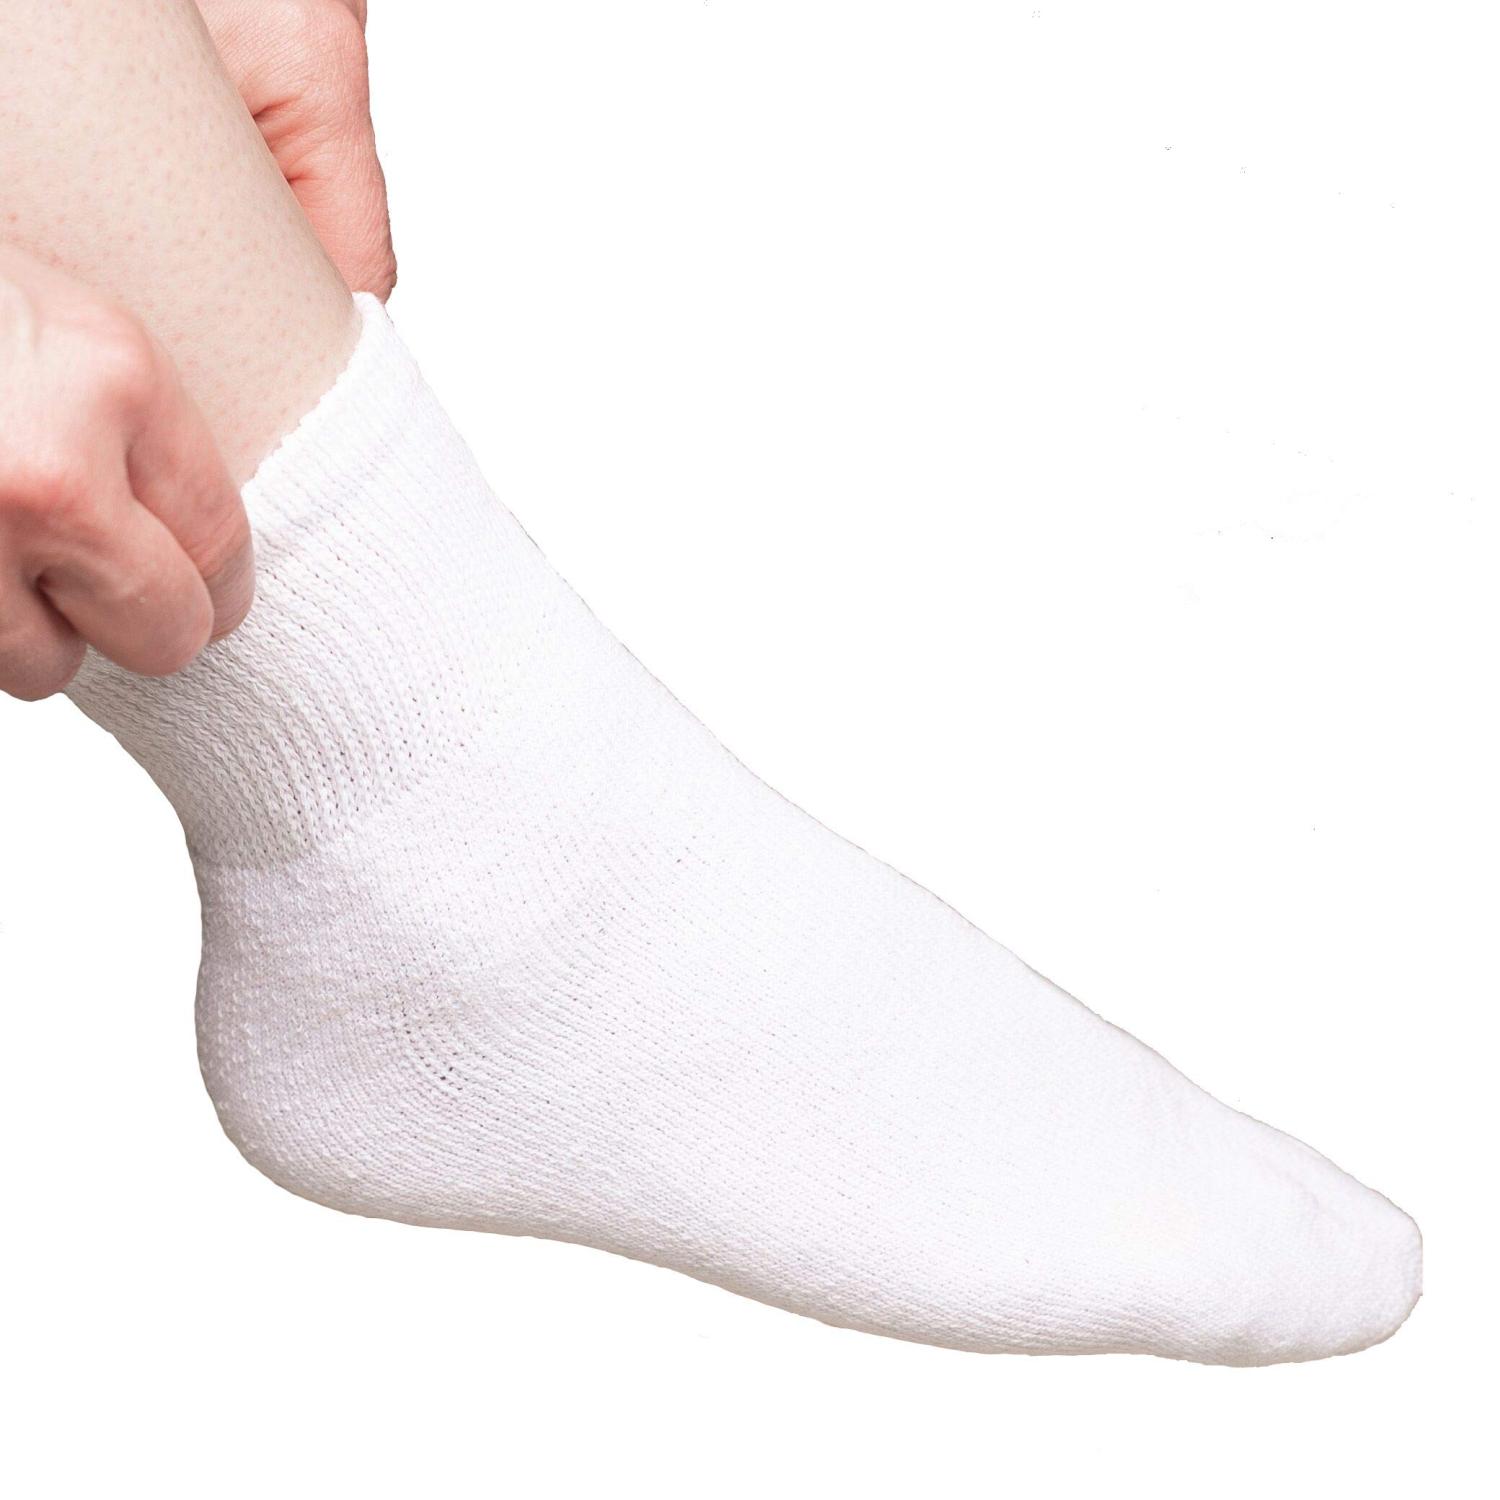 USA Diabetic Socks -Soft Comfortable Cotton - Non-Binding Wide